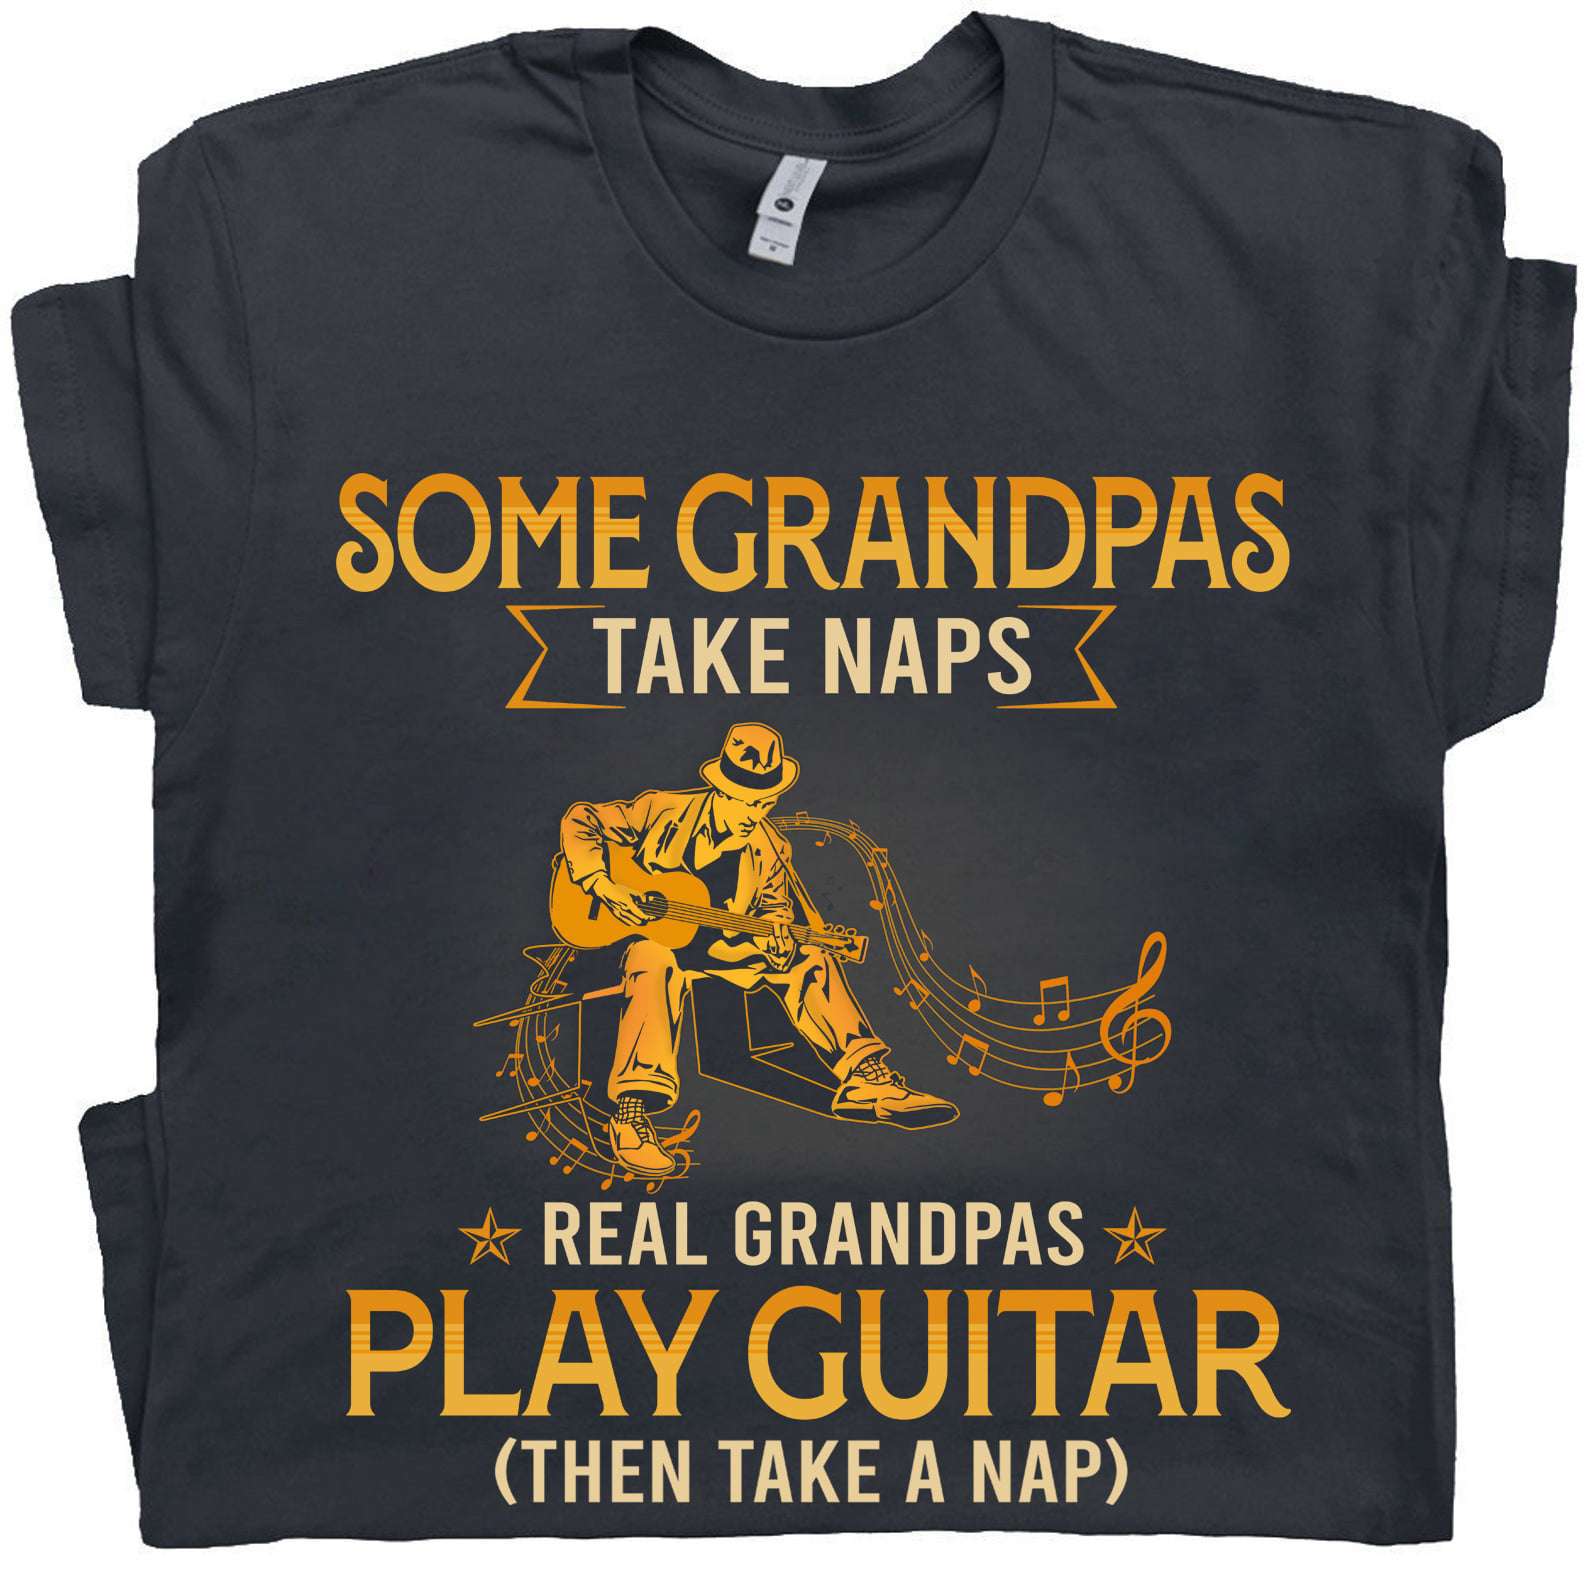 Some grandpas take naps, real grandpas play guitar then take a nap - Passionate guitarist